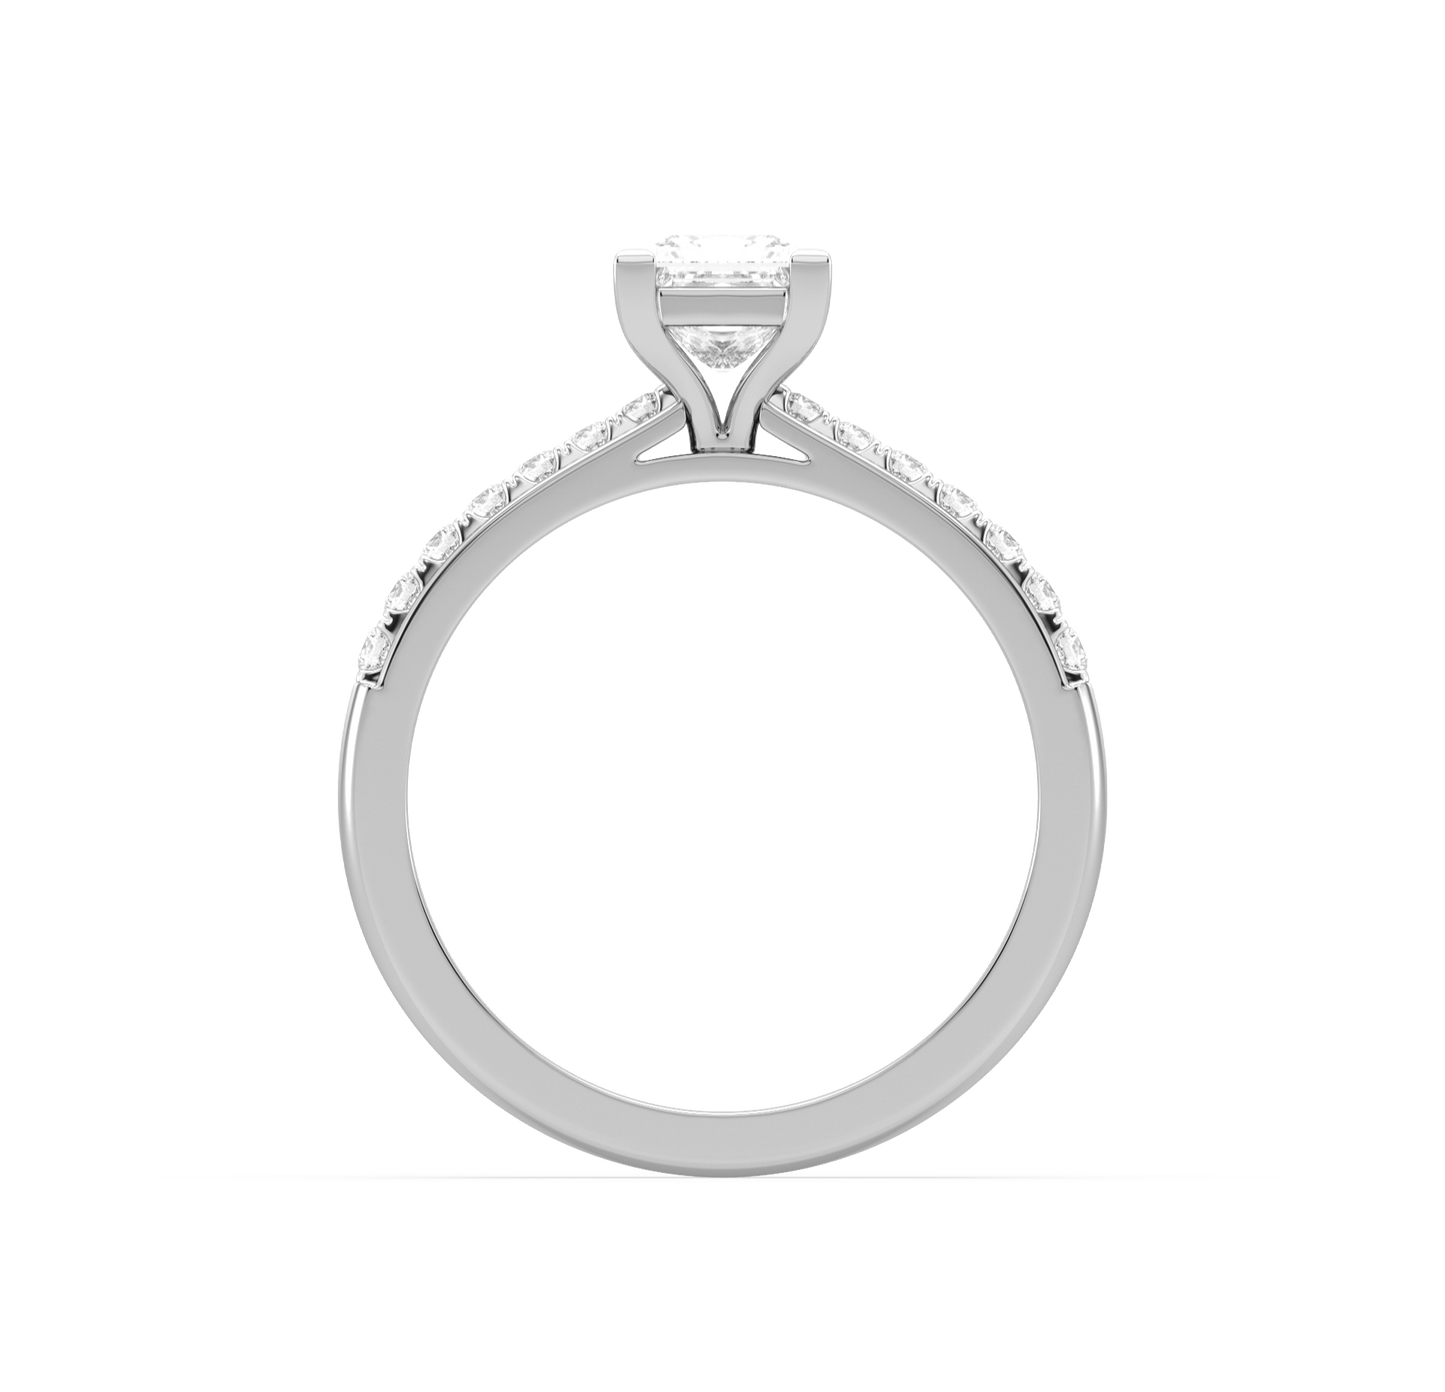 Customised ring RG21008-PH21003